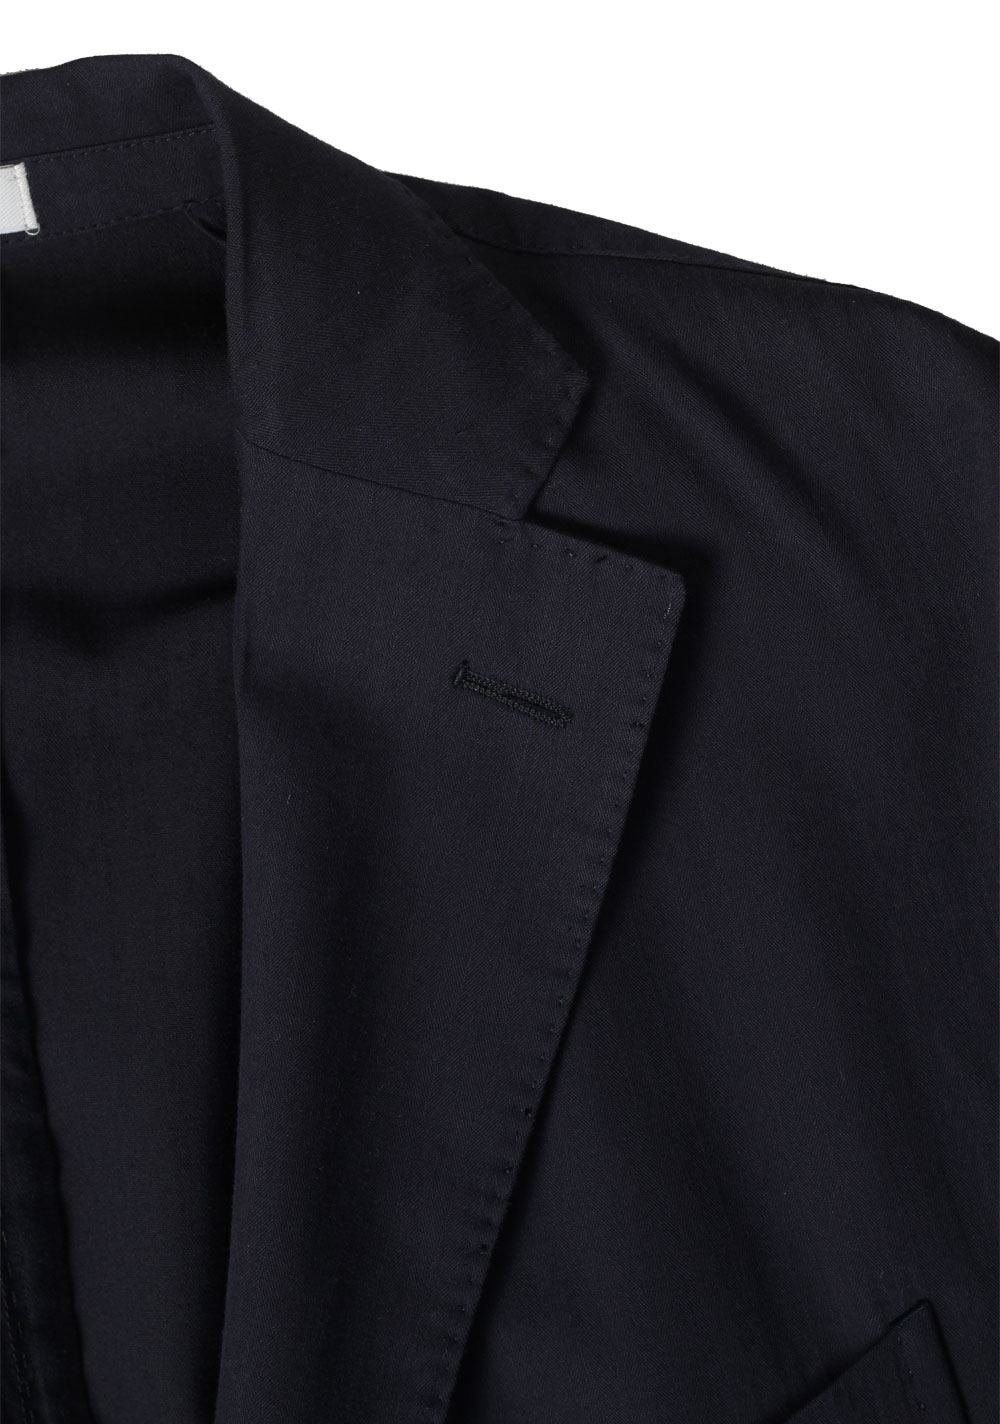 Boglioli K Jacket Blue Sport Coat Size 52 / 42R U.S. | Costume Limité